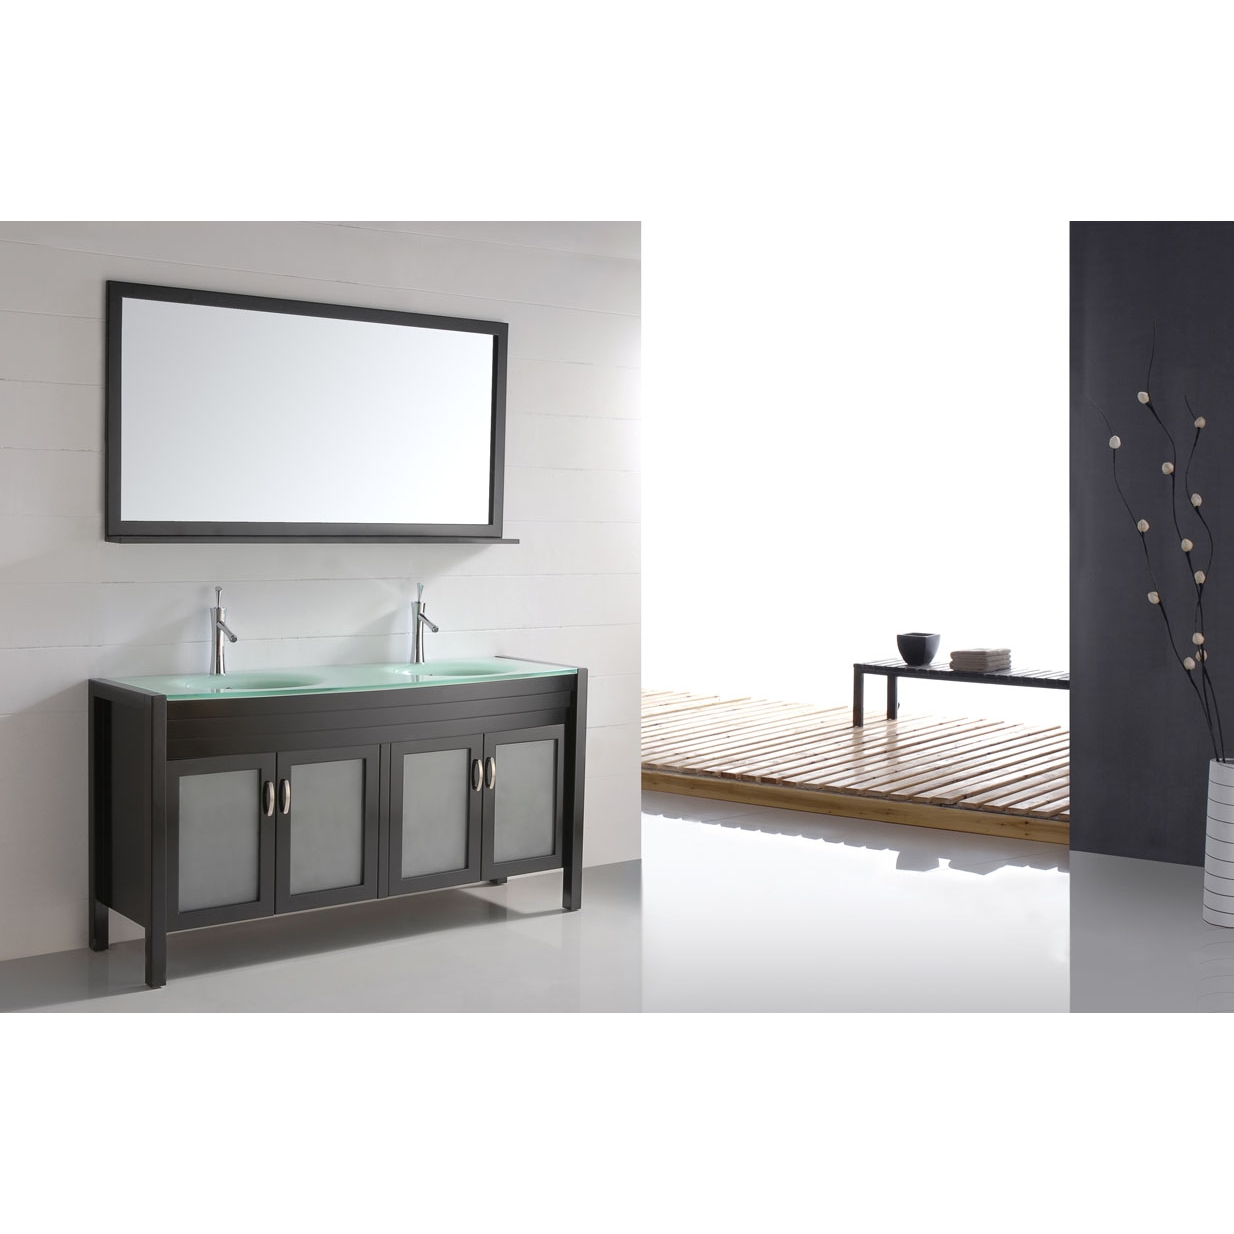 60 Solid Wood Double Sink Bathroom Vanity Glass Top Free Shipping Espresso Cb6011 Conceptbathscom